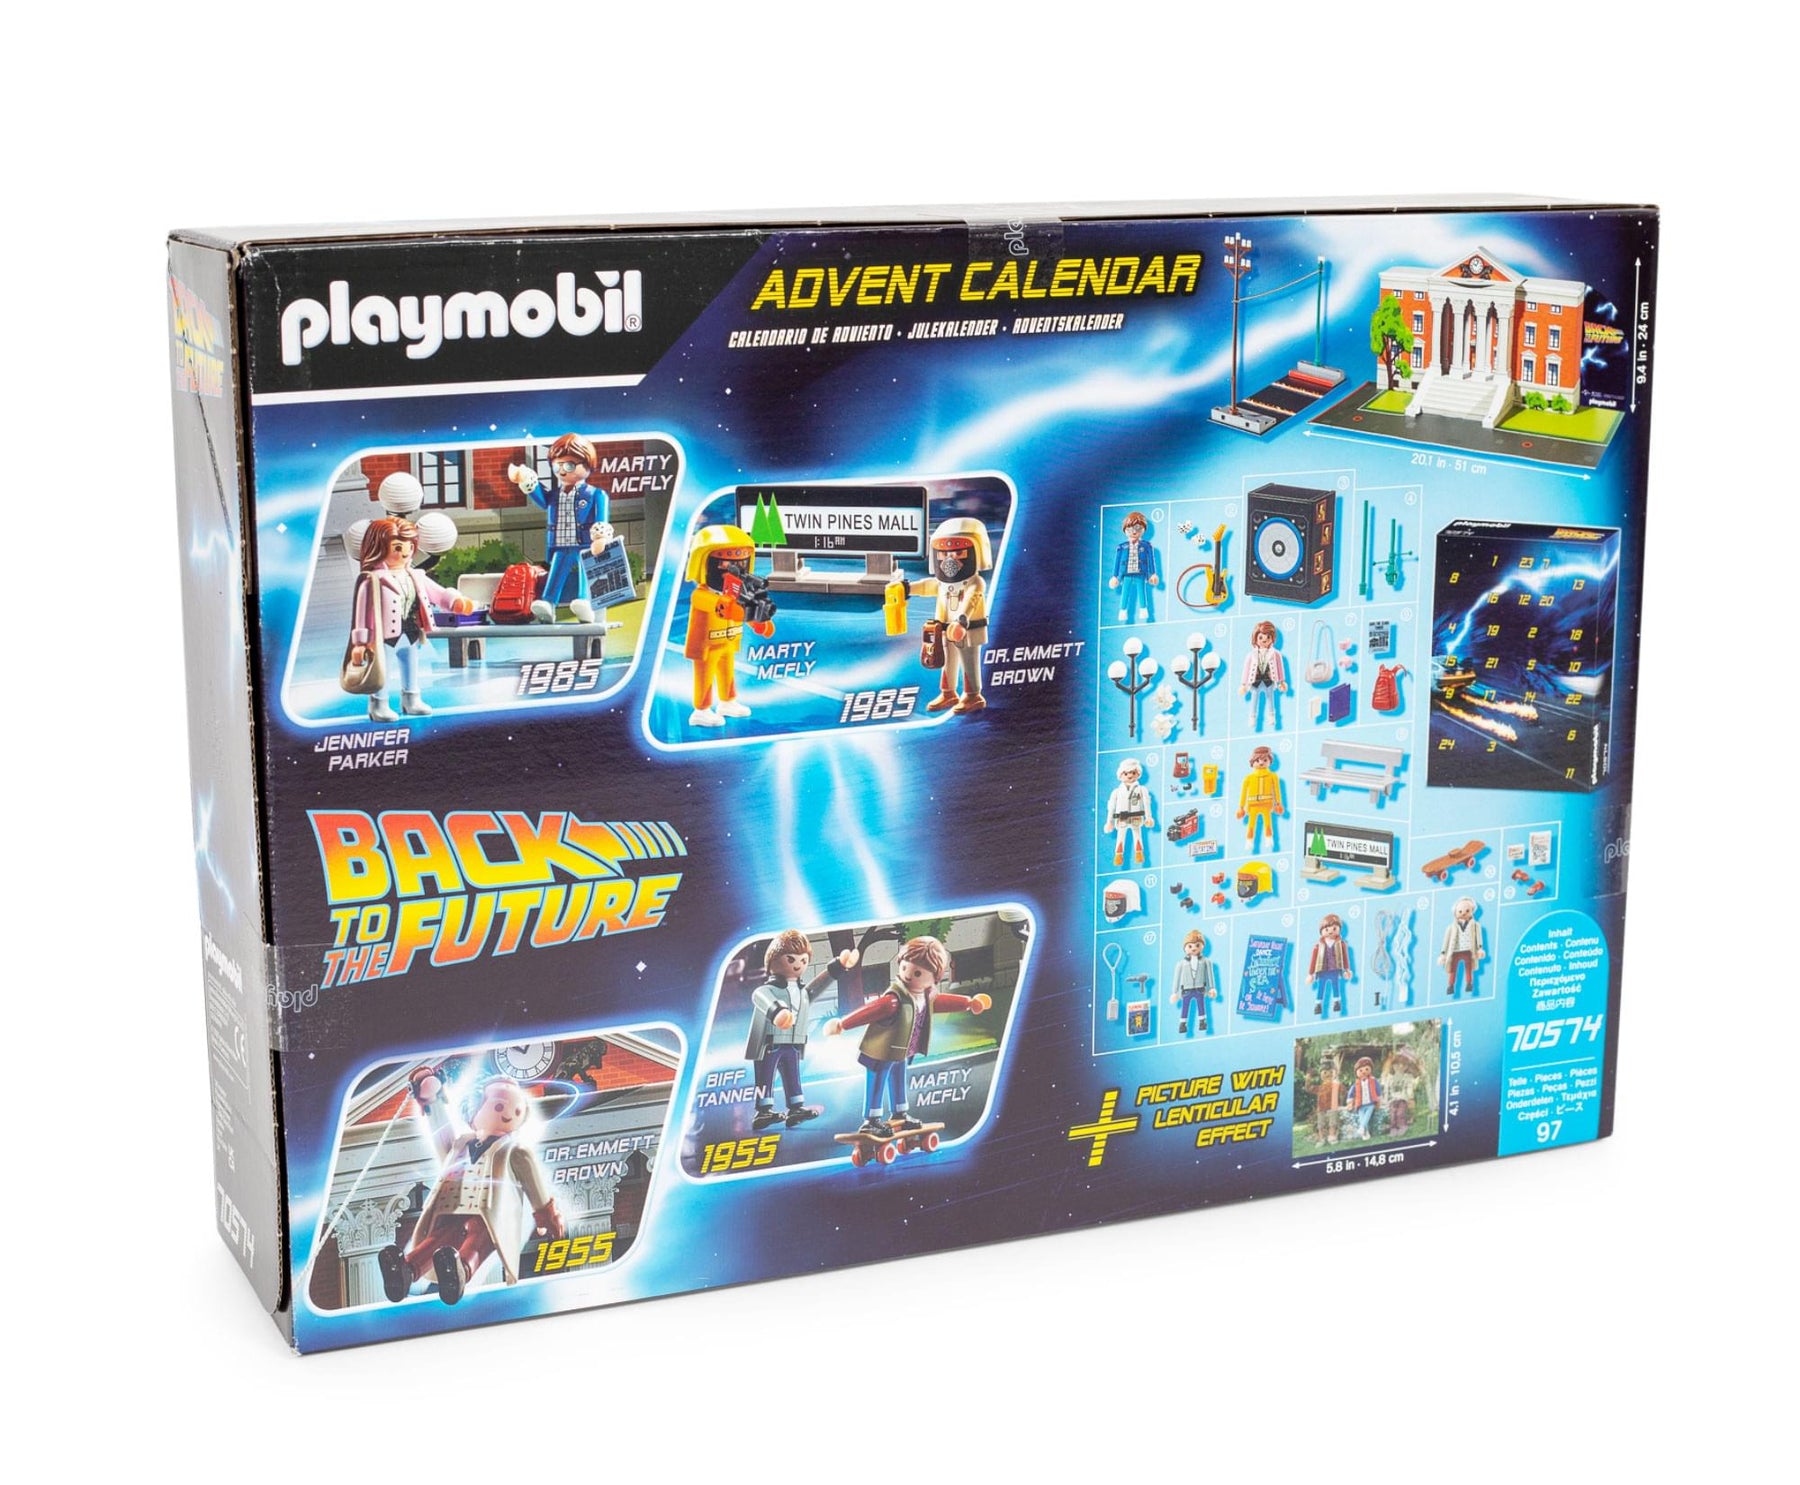 Back to the Future Playmobil Advent Calendar